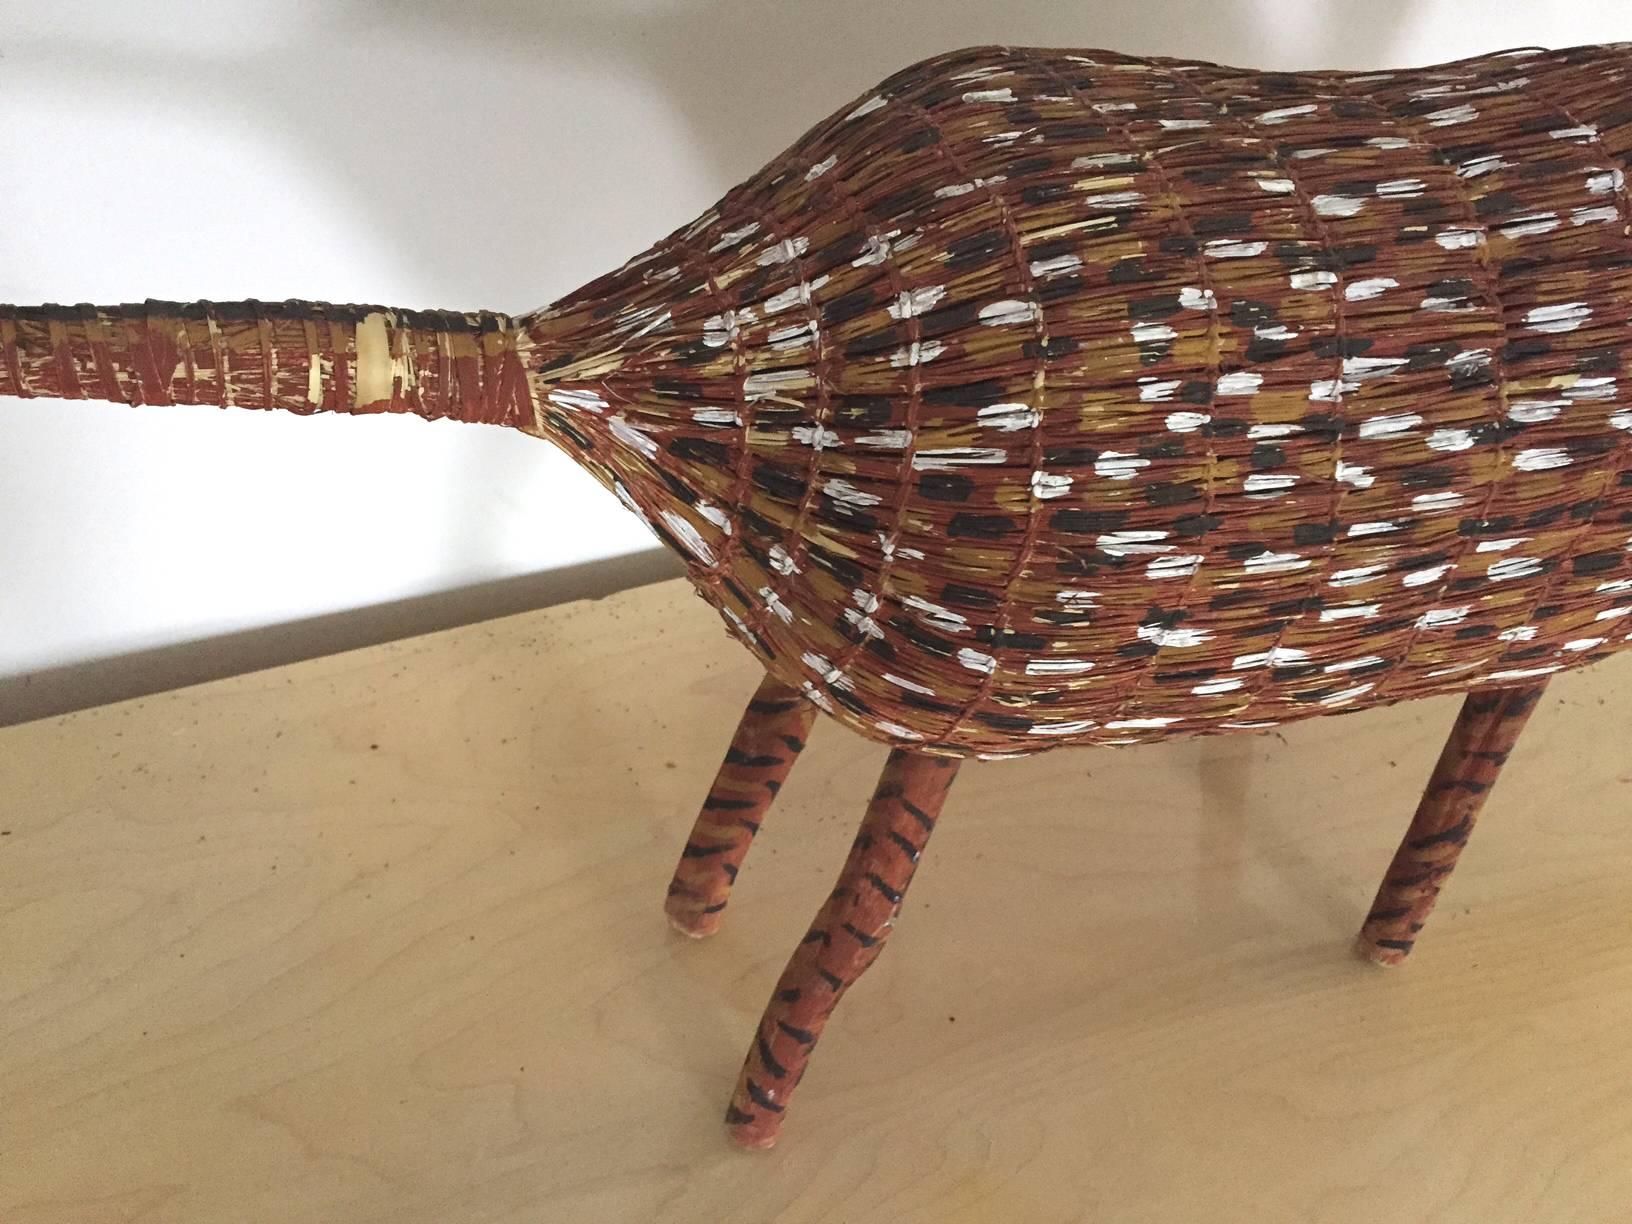 Aboriginal Contemporary Fiber Art Camp Dog In Good Condition For Sale In Atlanta, GA